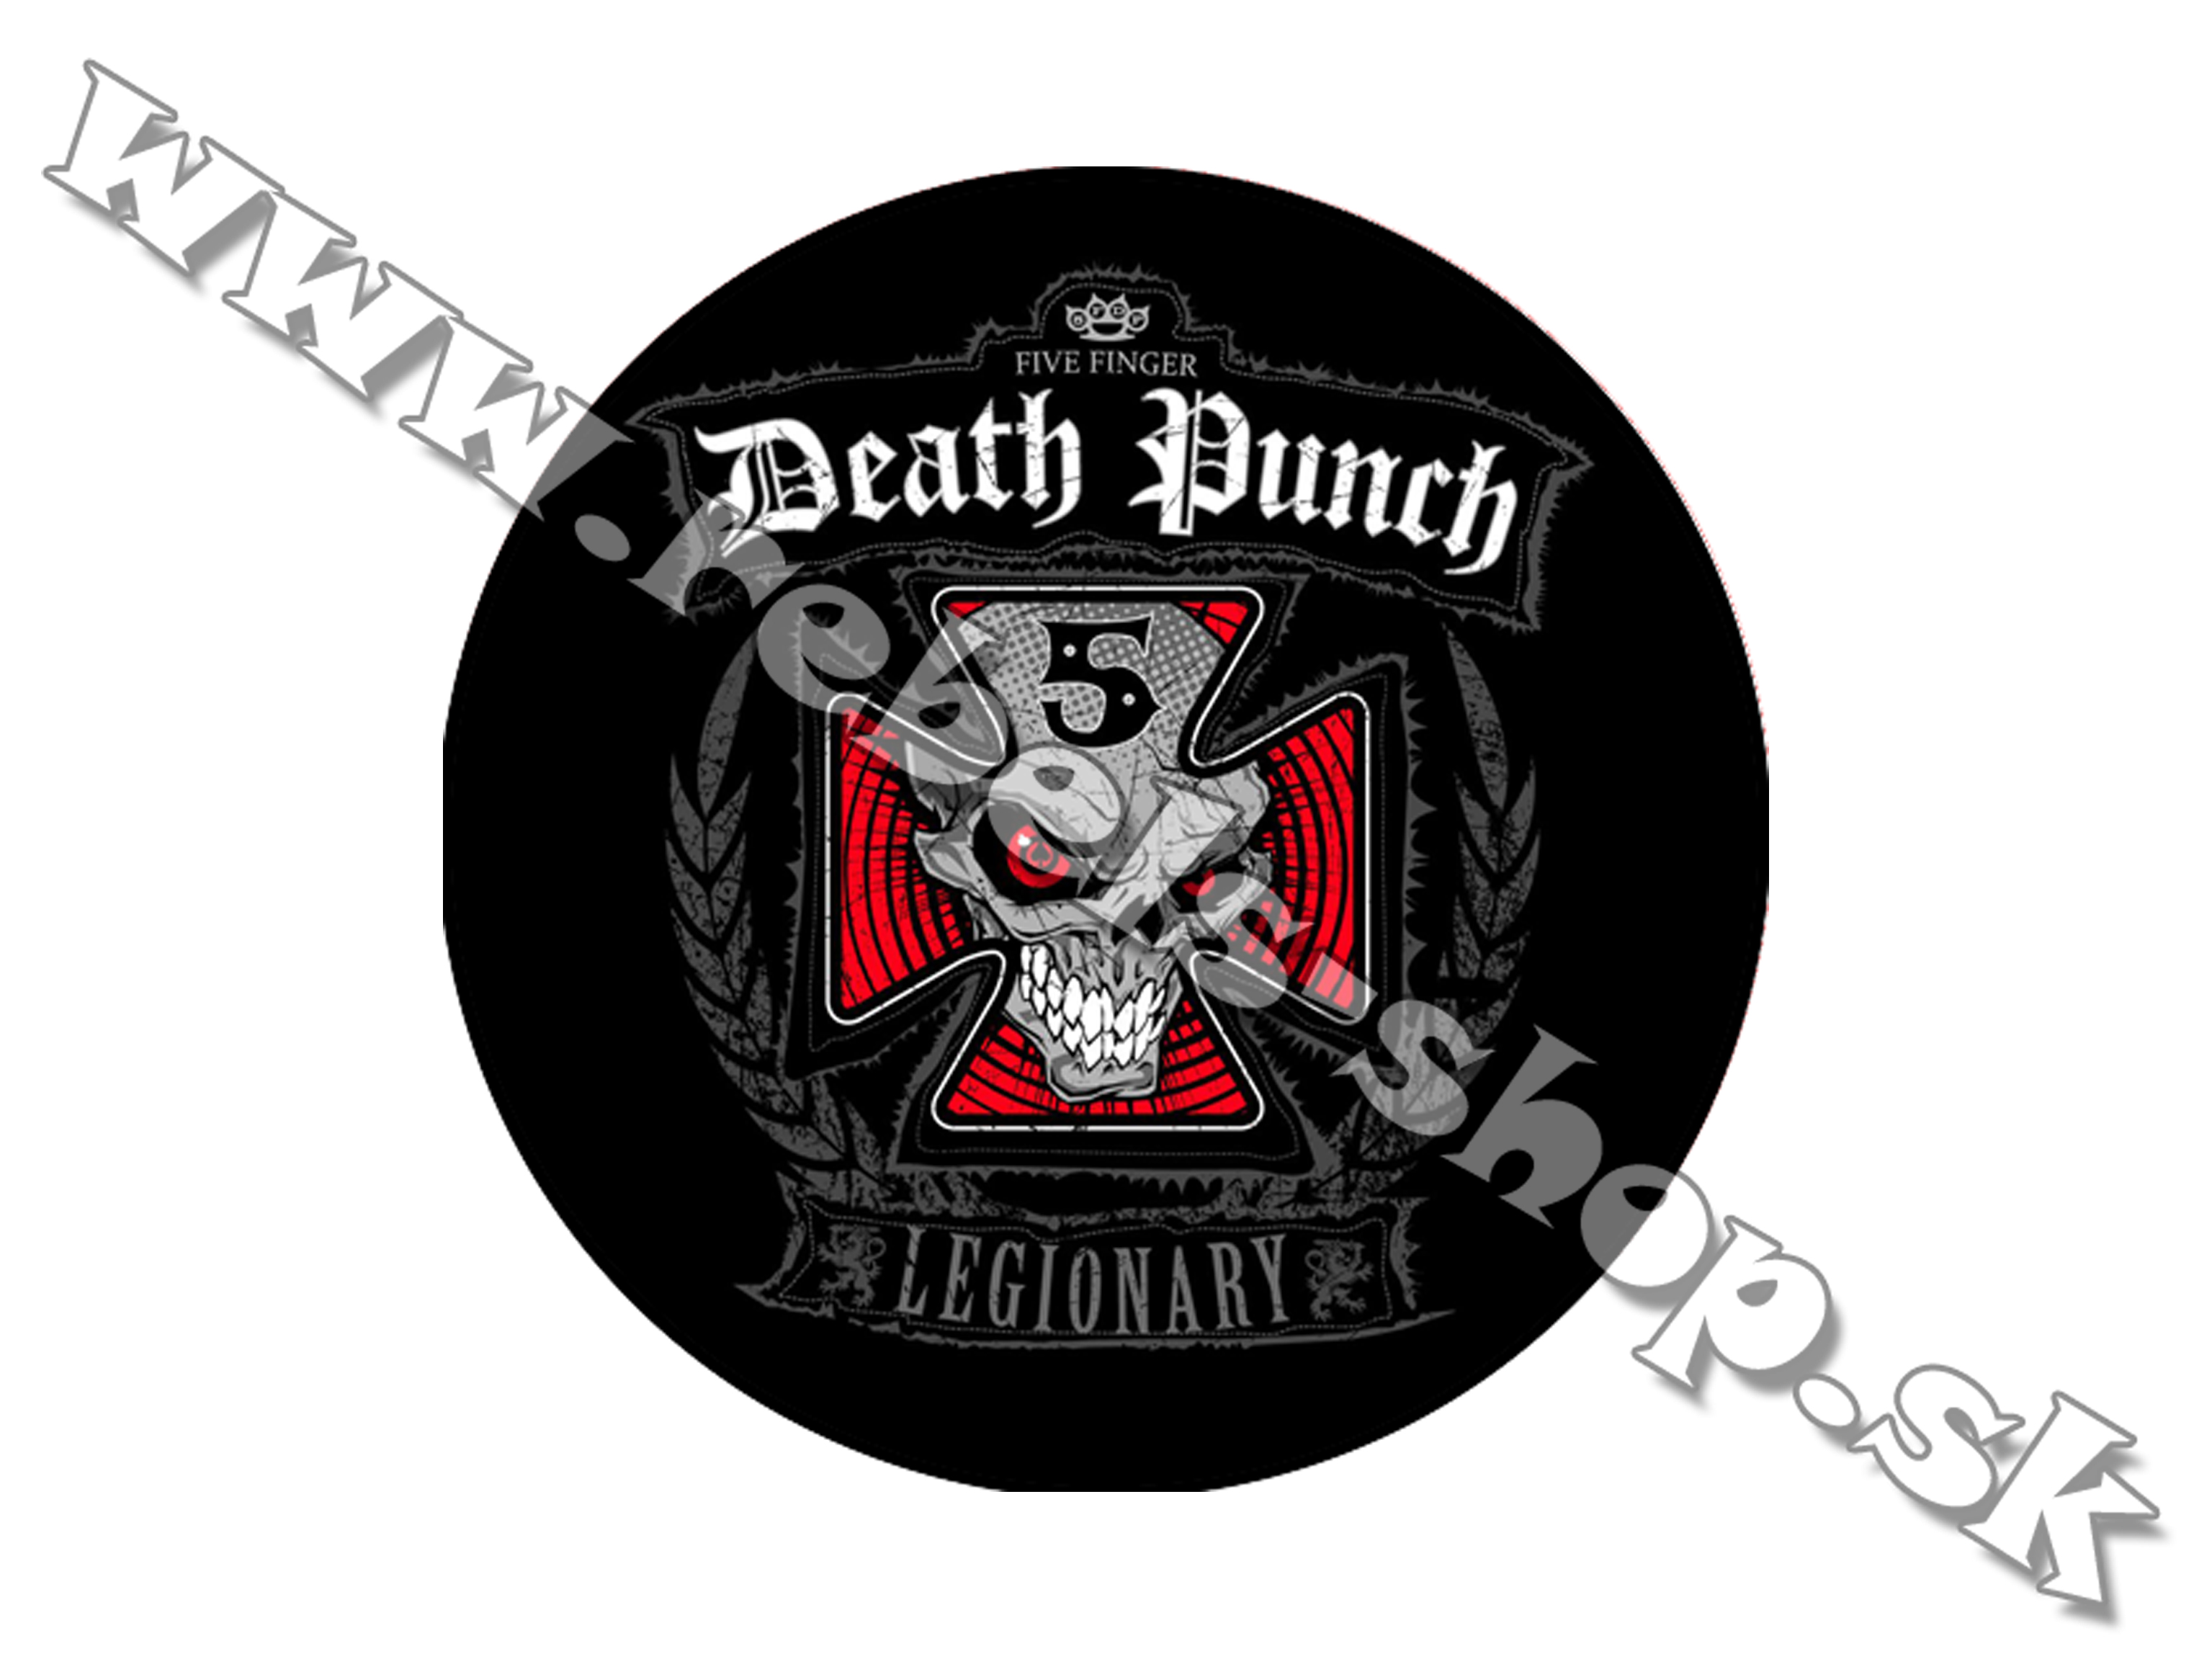 Odznak "Five Finger Death Punch"